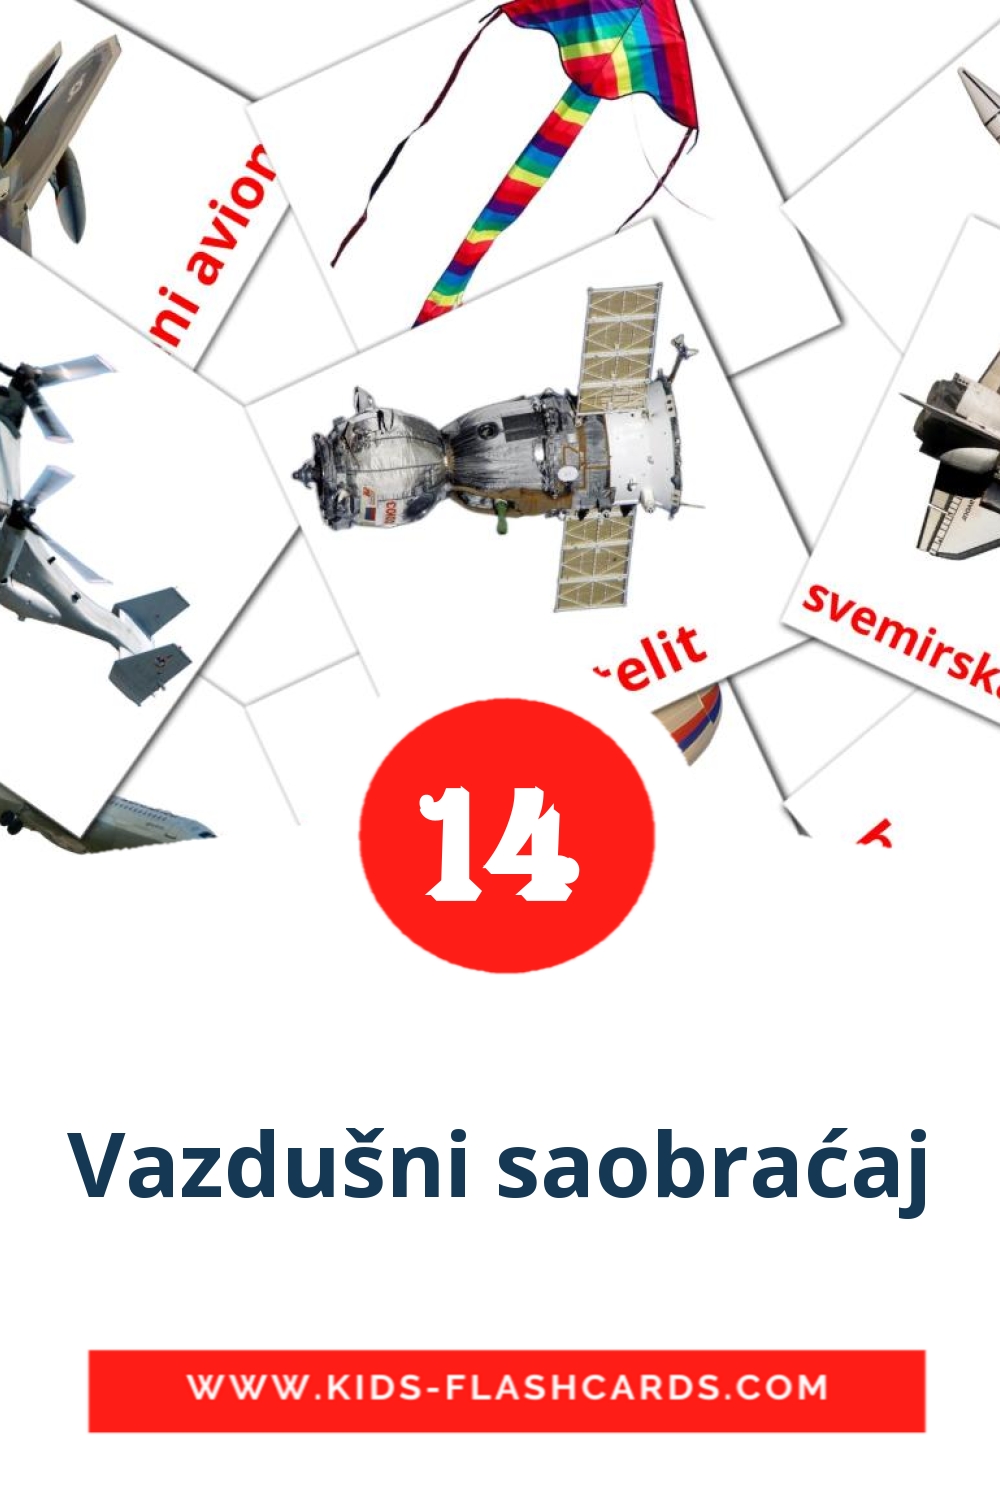 Vazdušni saobraćaj на македонском для Детского Сада (14 карточек)